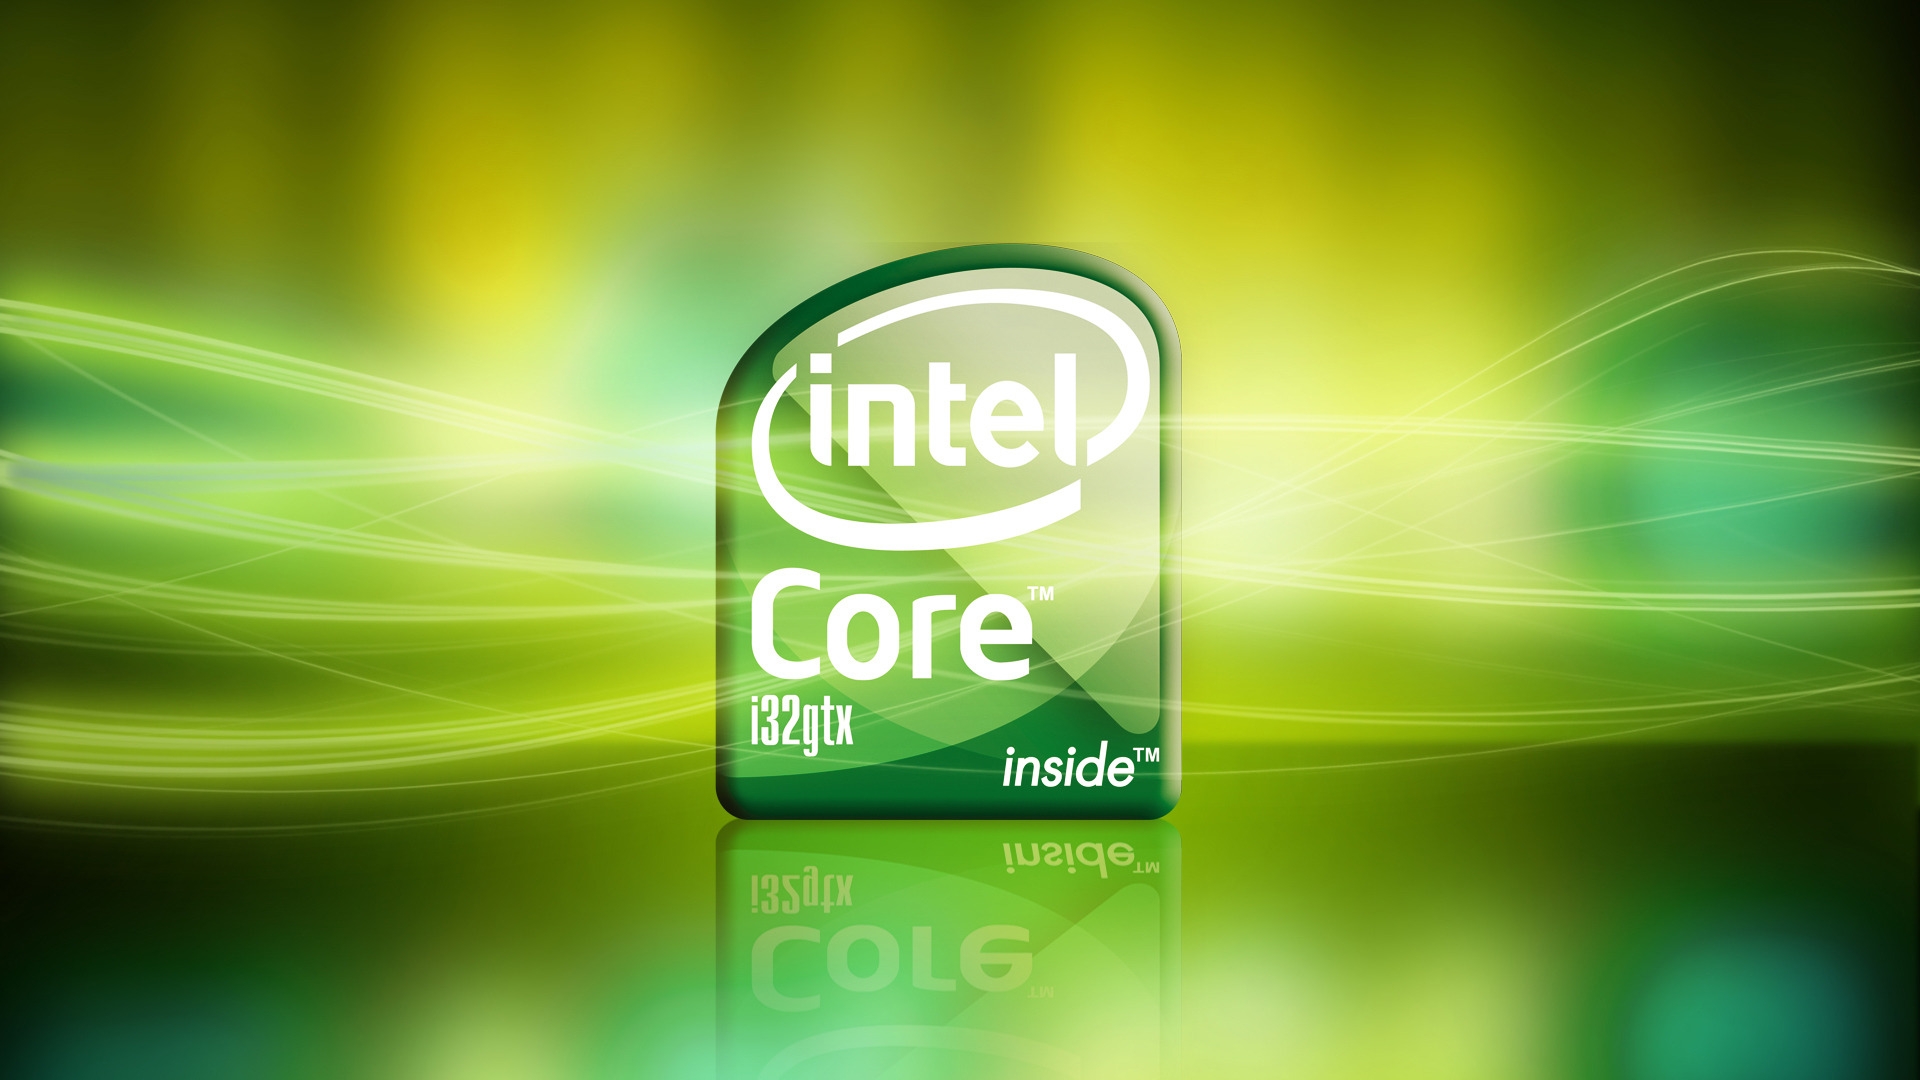 Intel Core i32gtx for 1920 x 1080 HDTV 1080p resolution